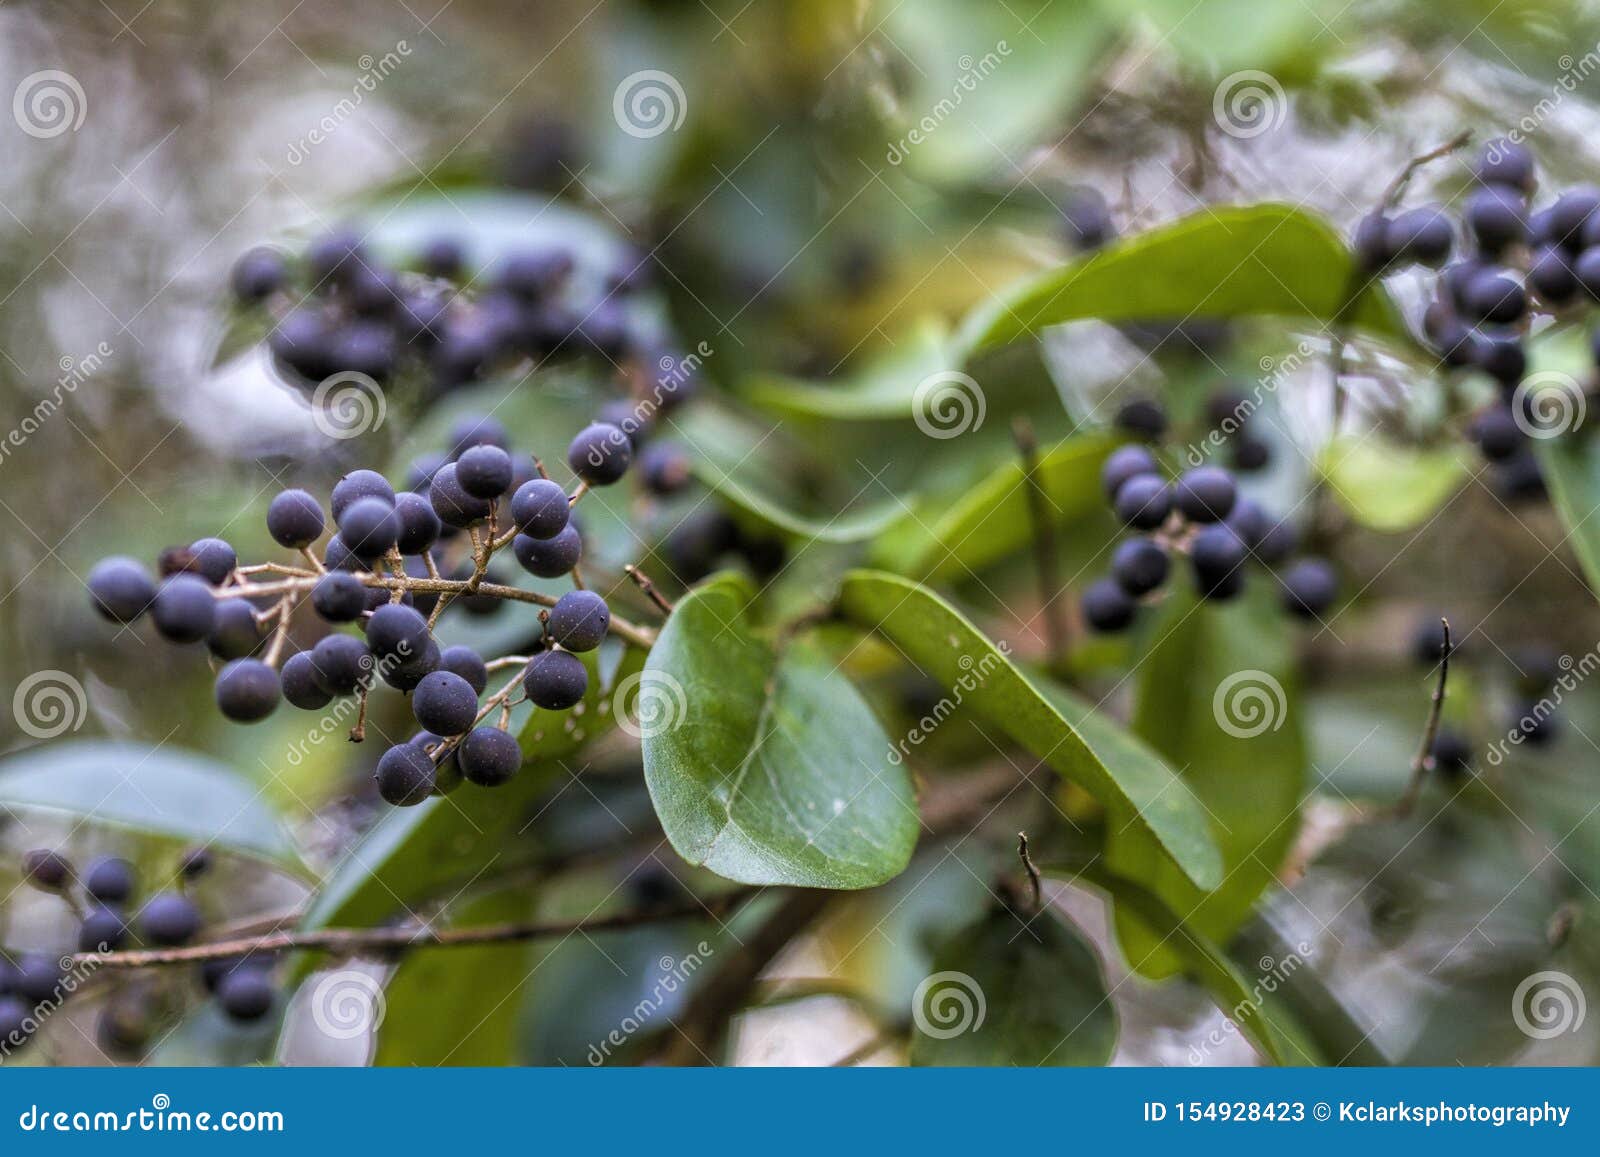 common privet berries - ligustrum vulgare